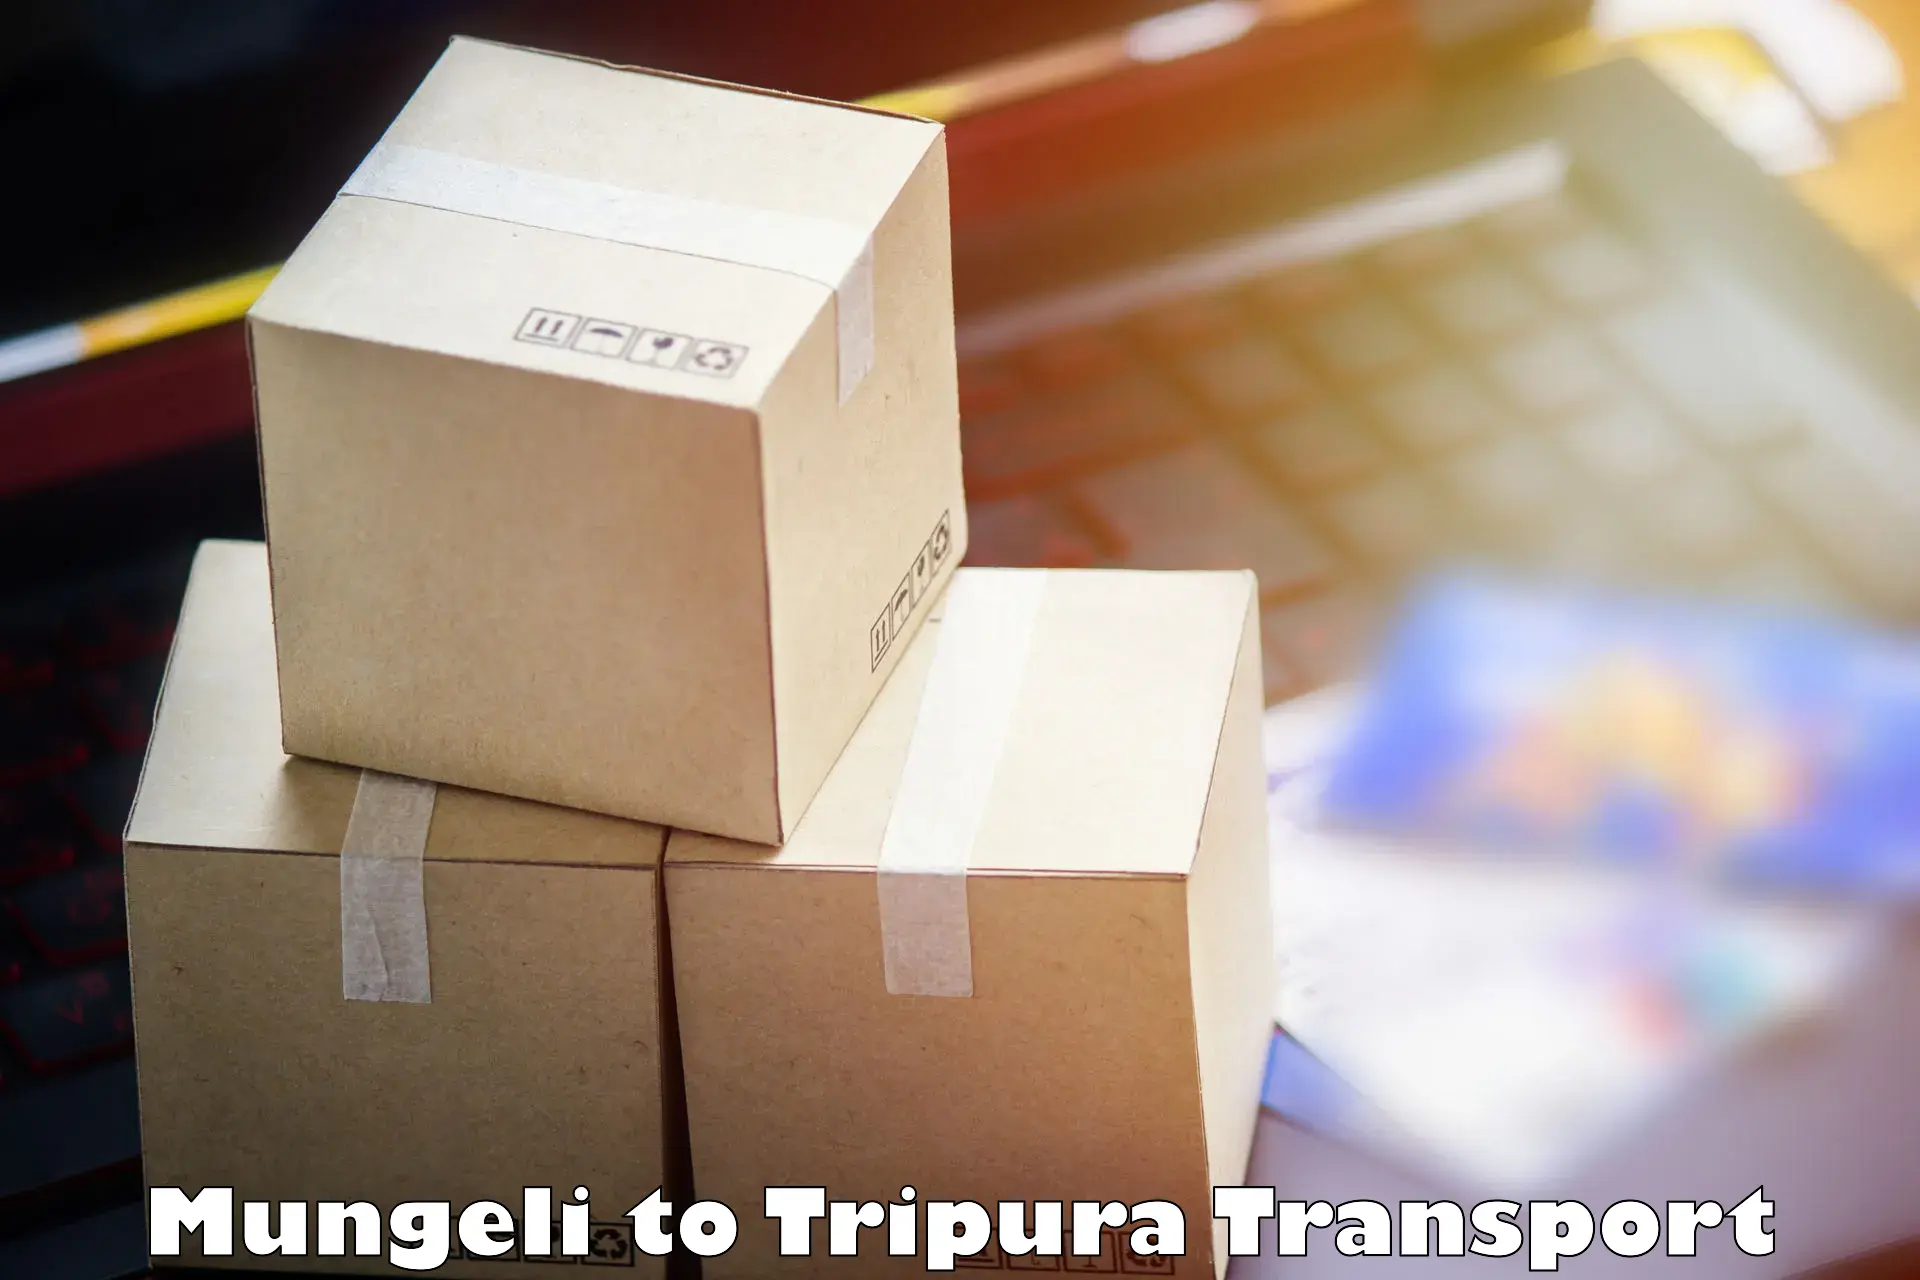 Daily transport service Mungeli to Tripura